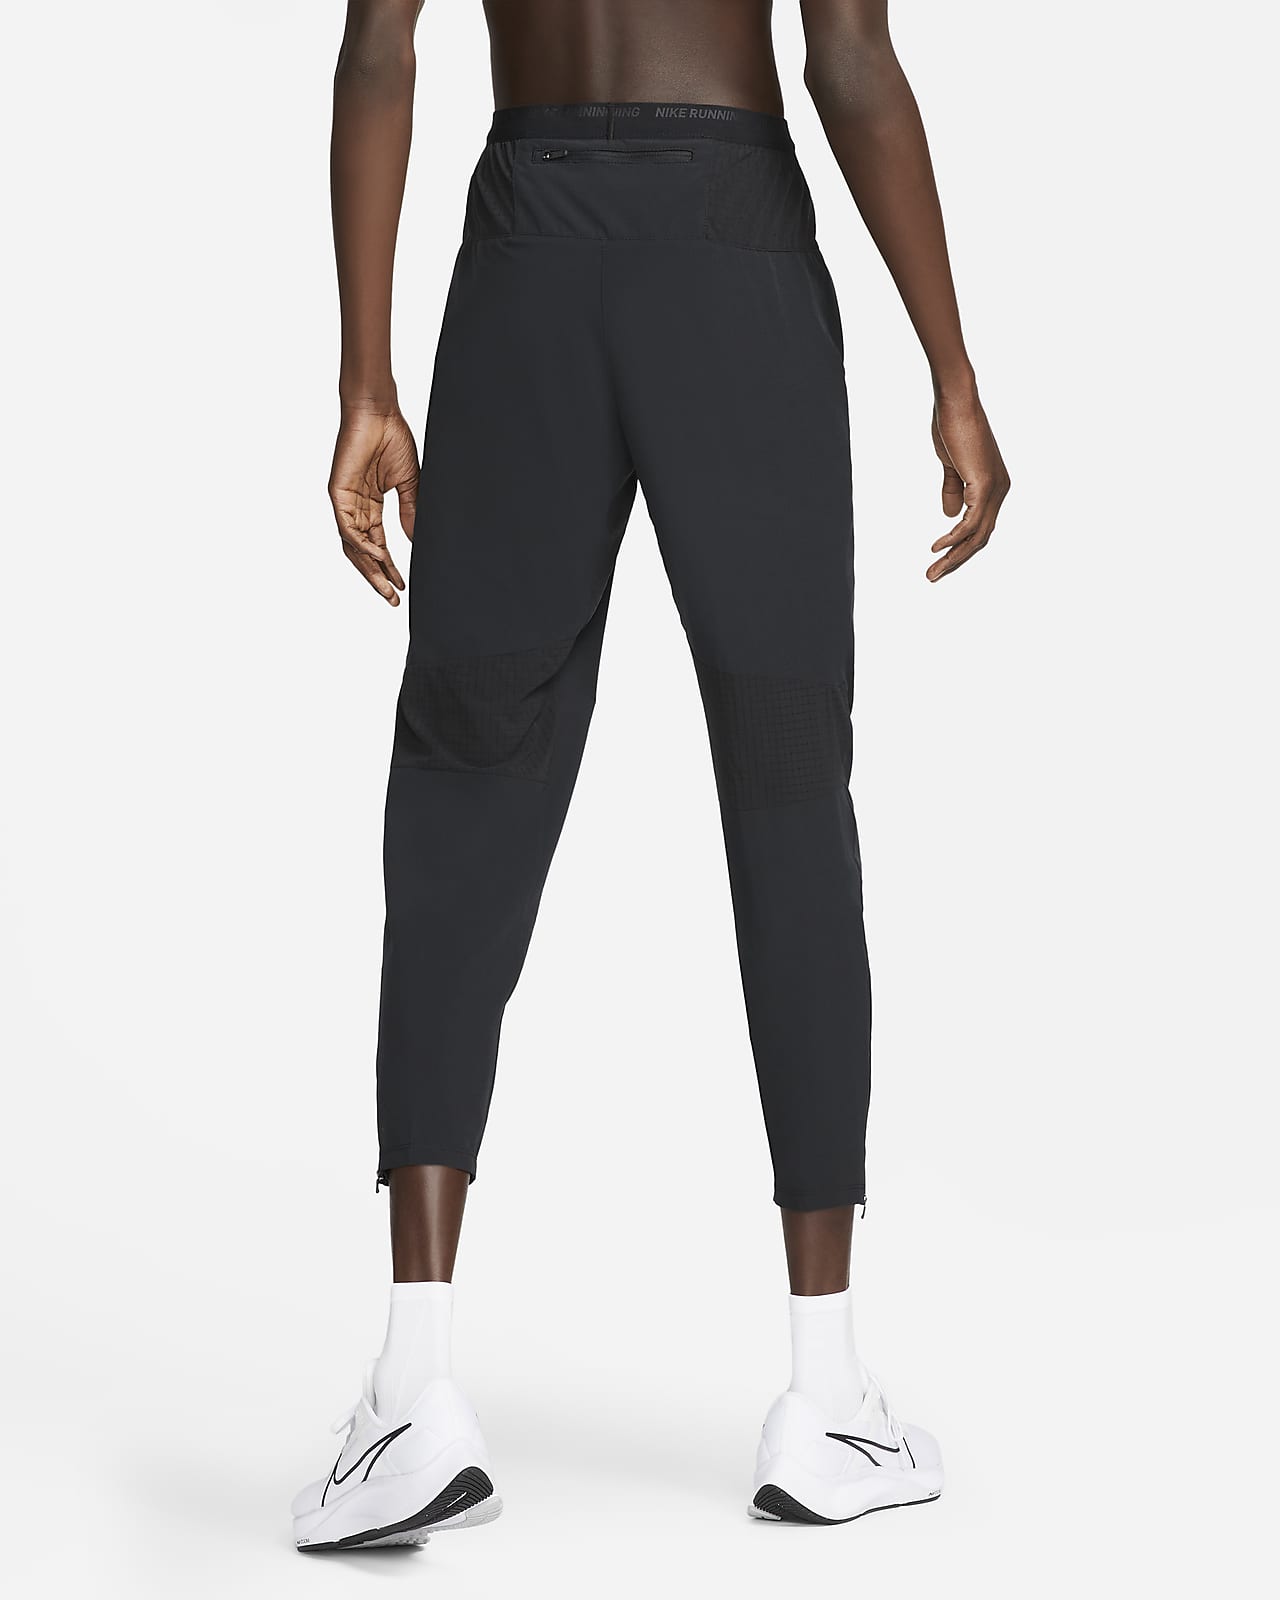 Nike Yoga Pants Polyester/Wool Blend.